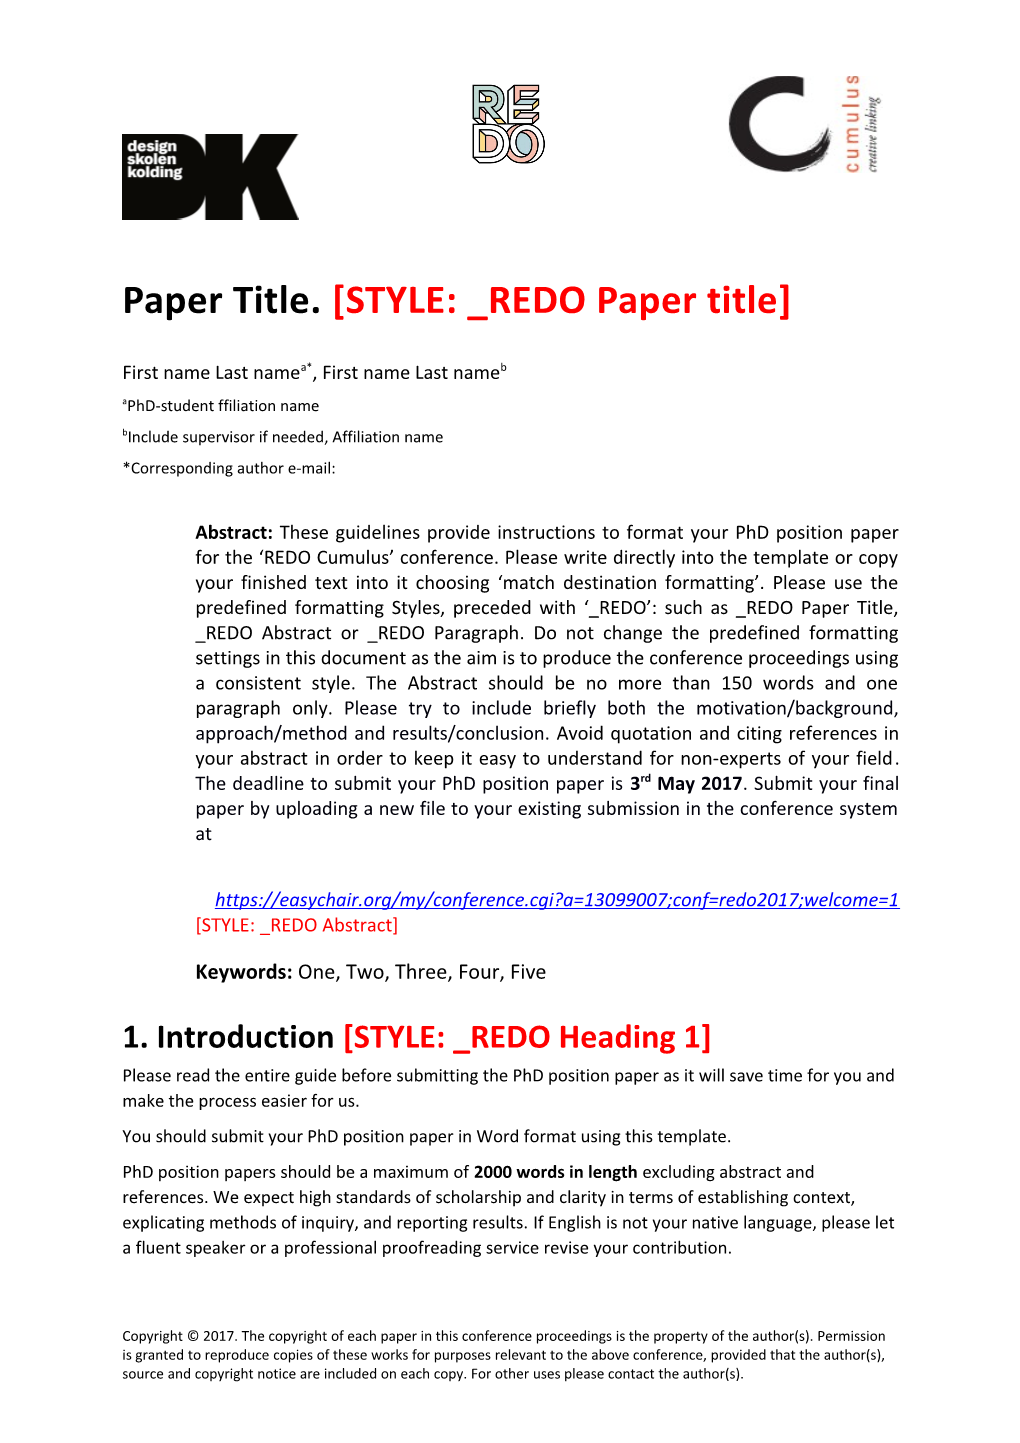 Article Title STYLE: REDO Running Head Odd